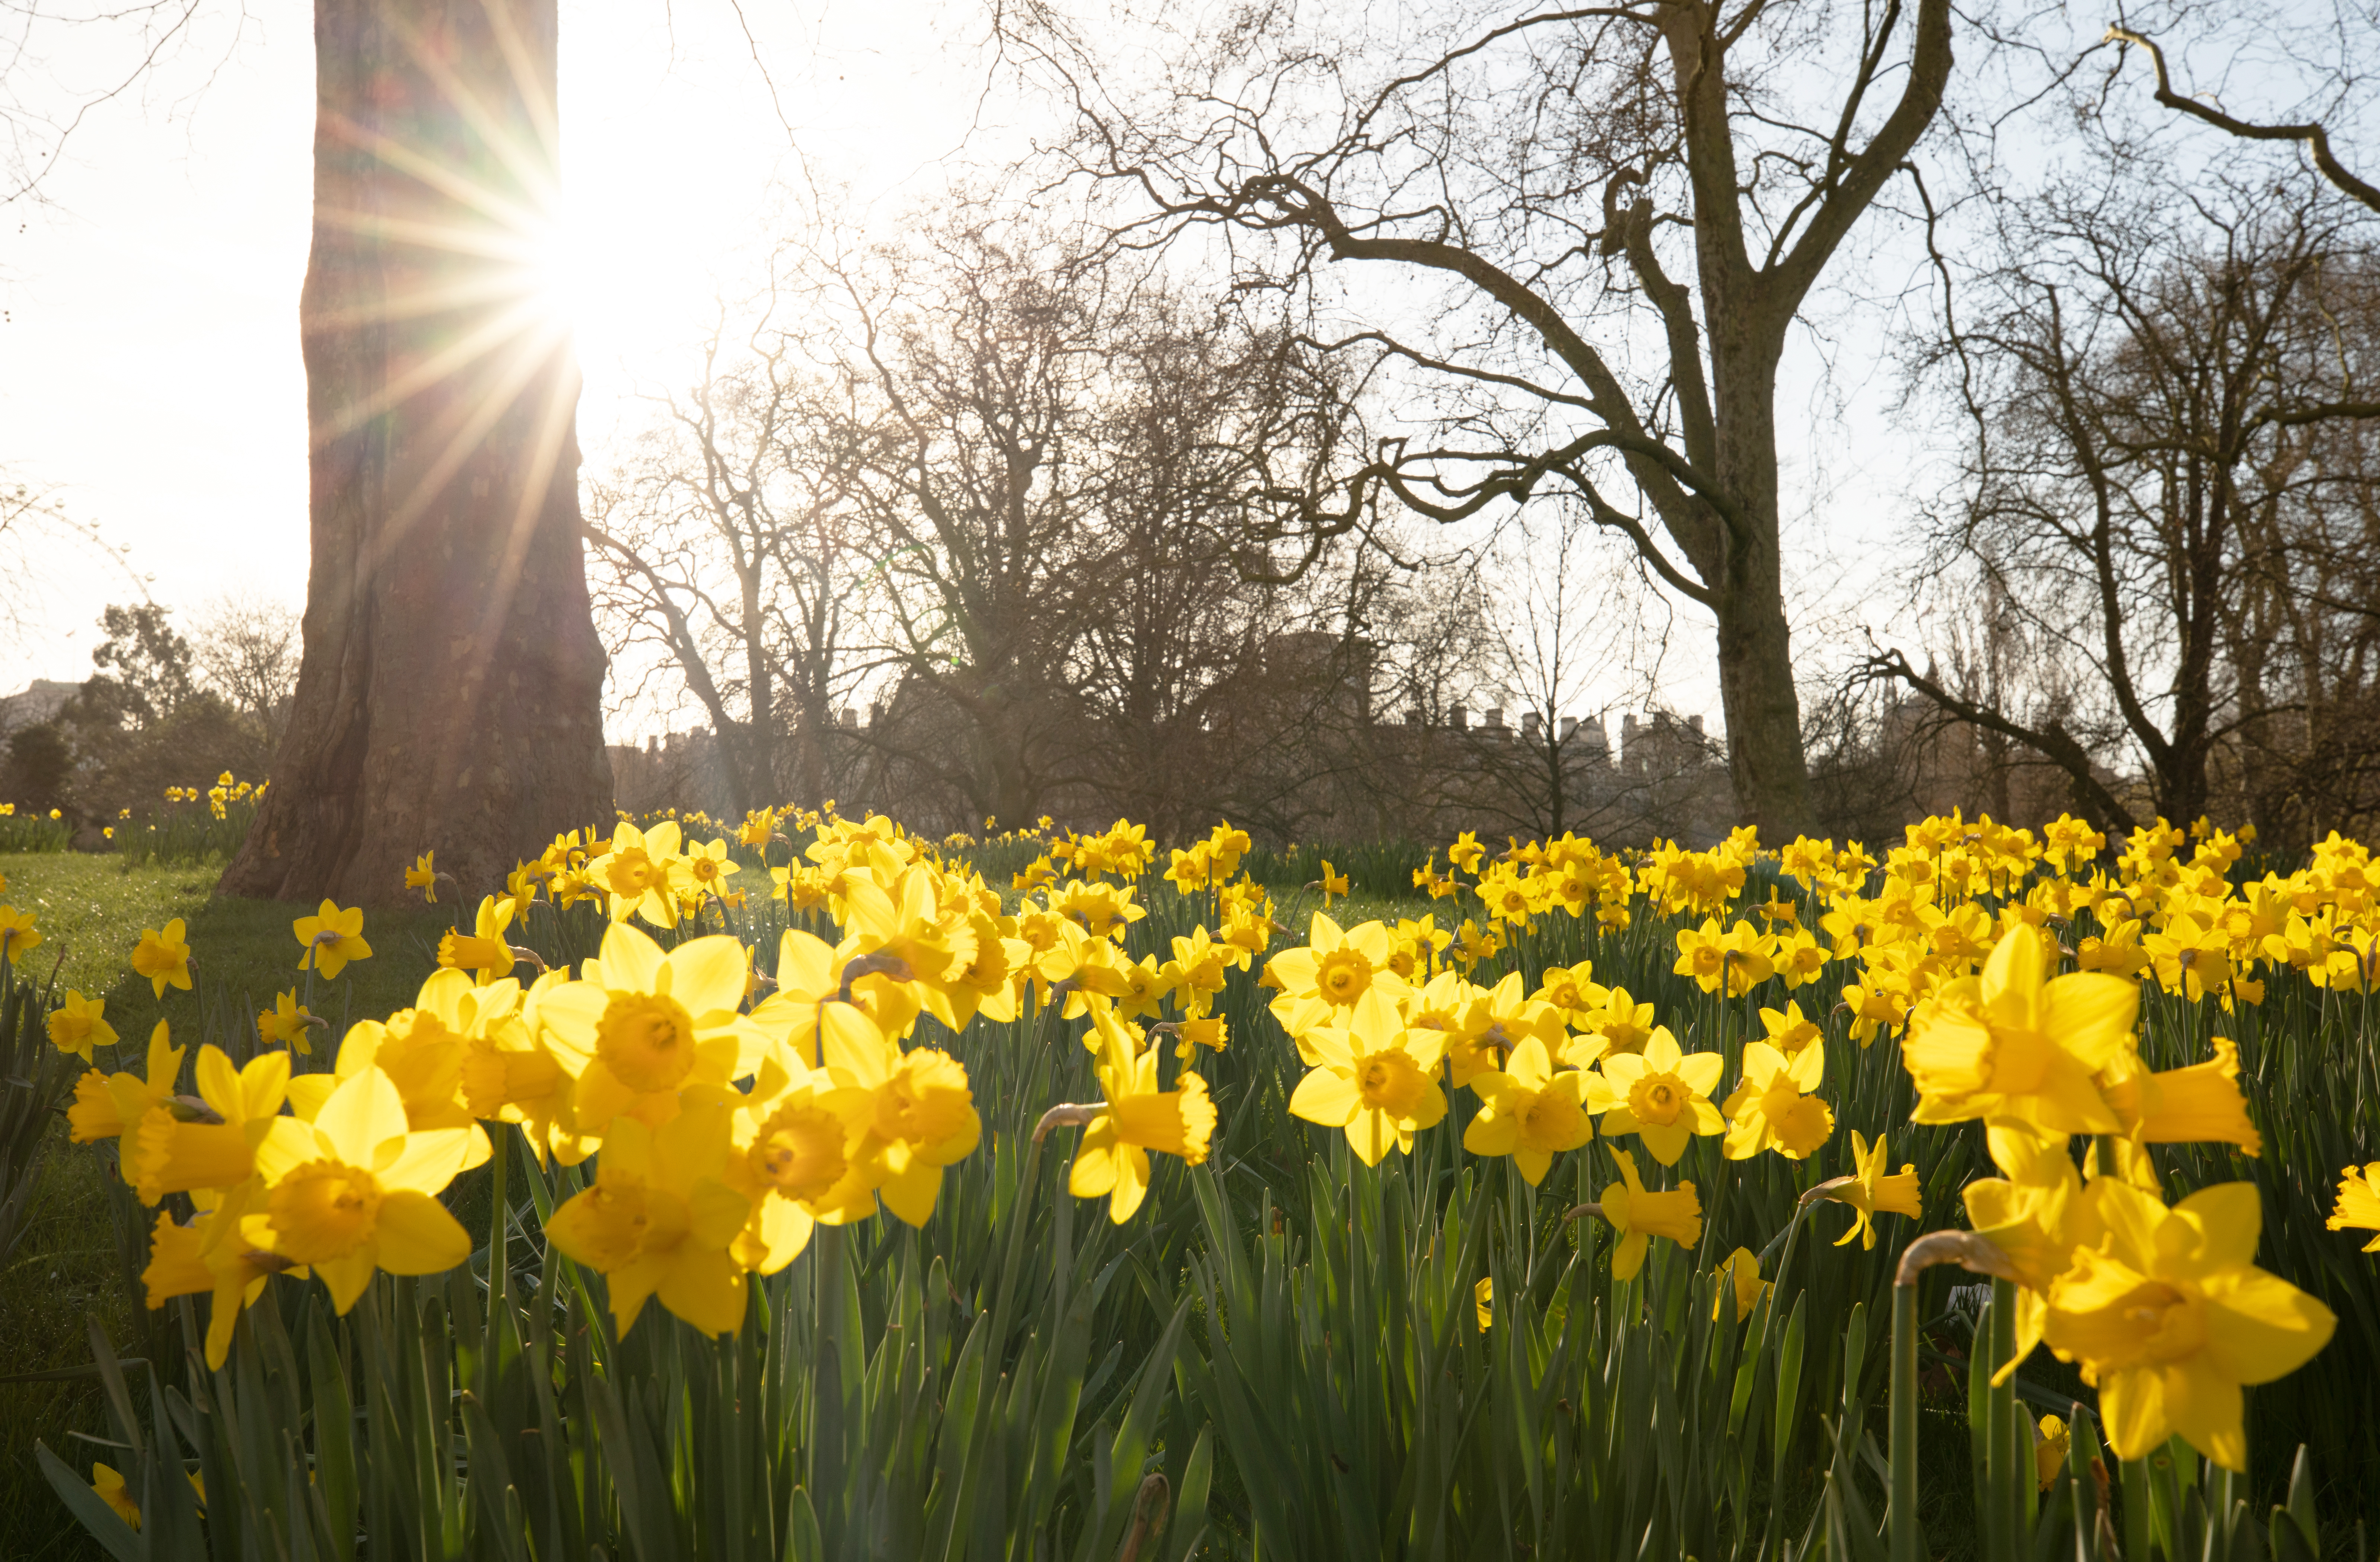 Spring scenes across London, United Kingdom